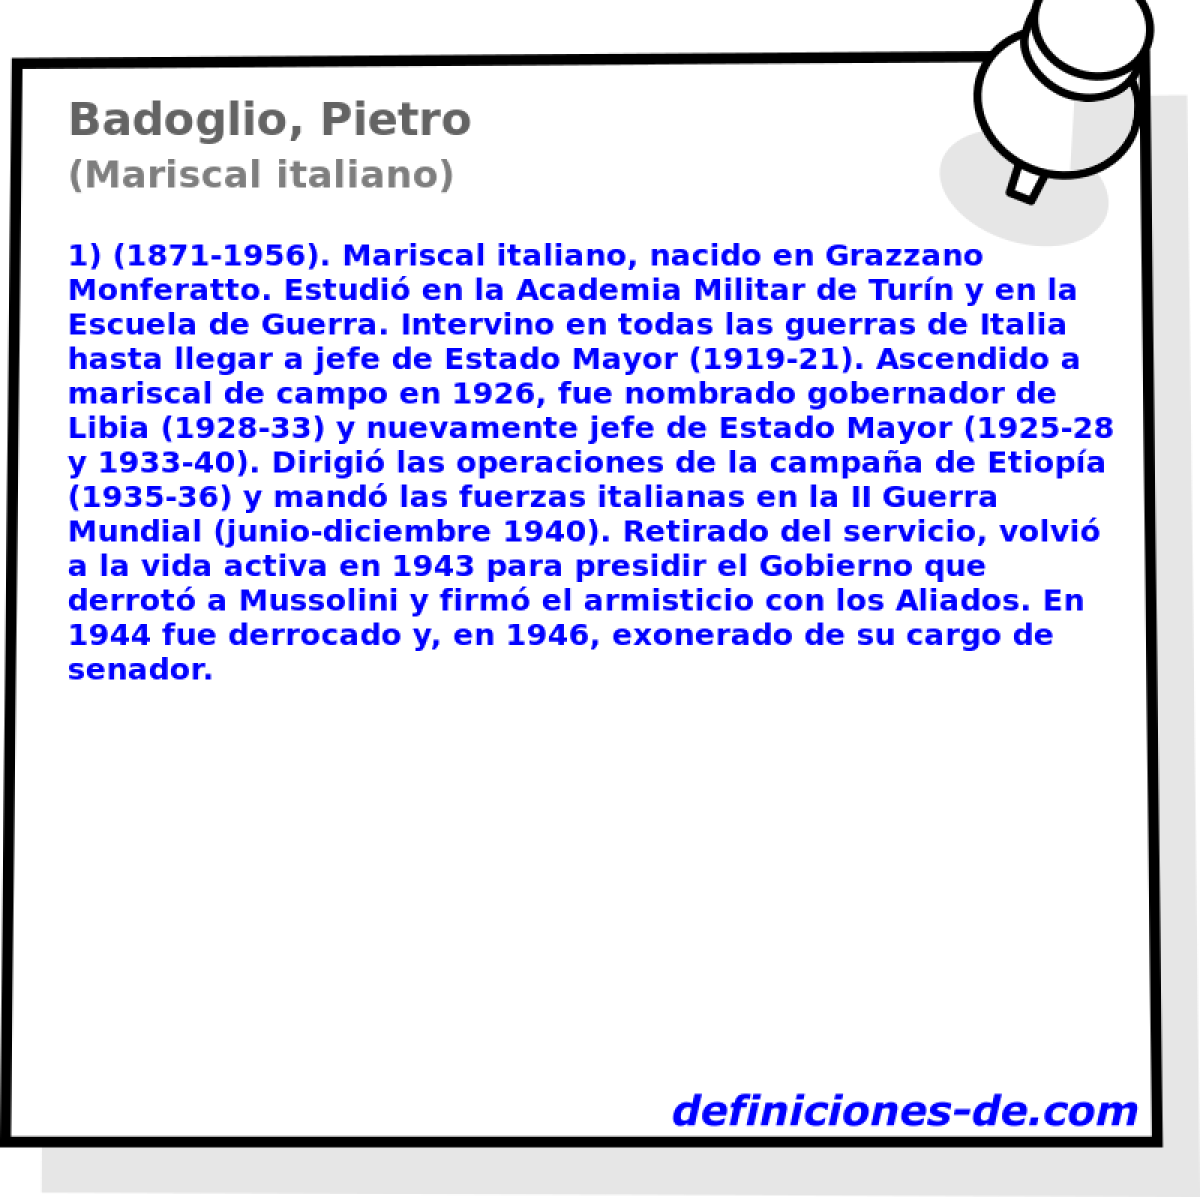 Badoglio, Pietro (Mariscal italiano)